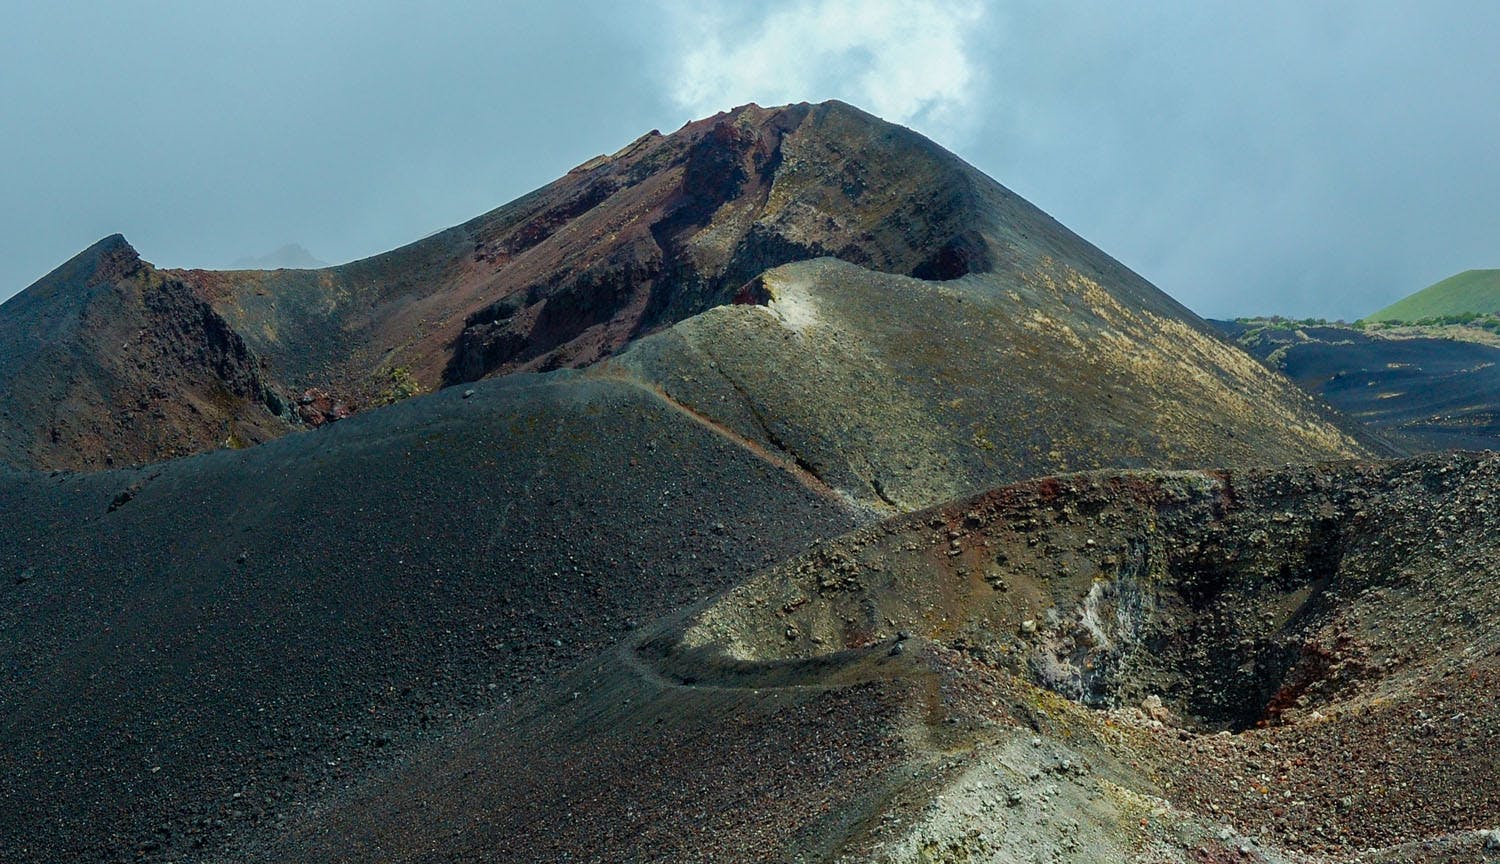 buea - mont cameroon, an active volcano